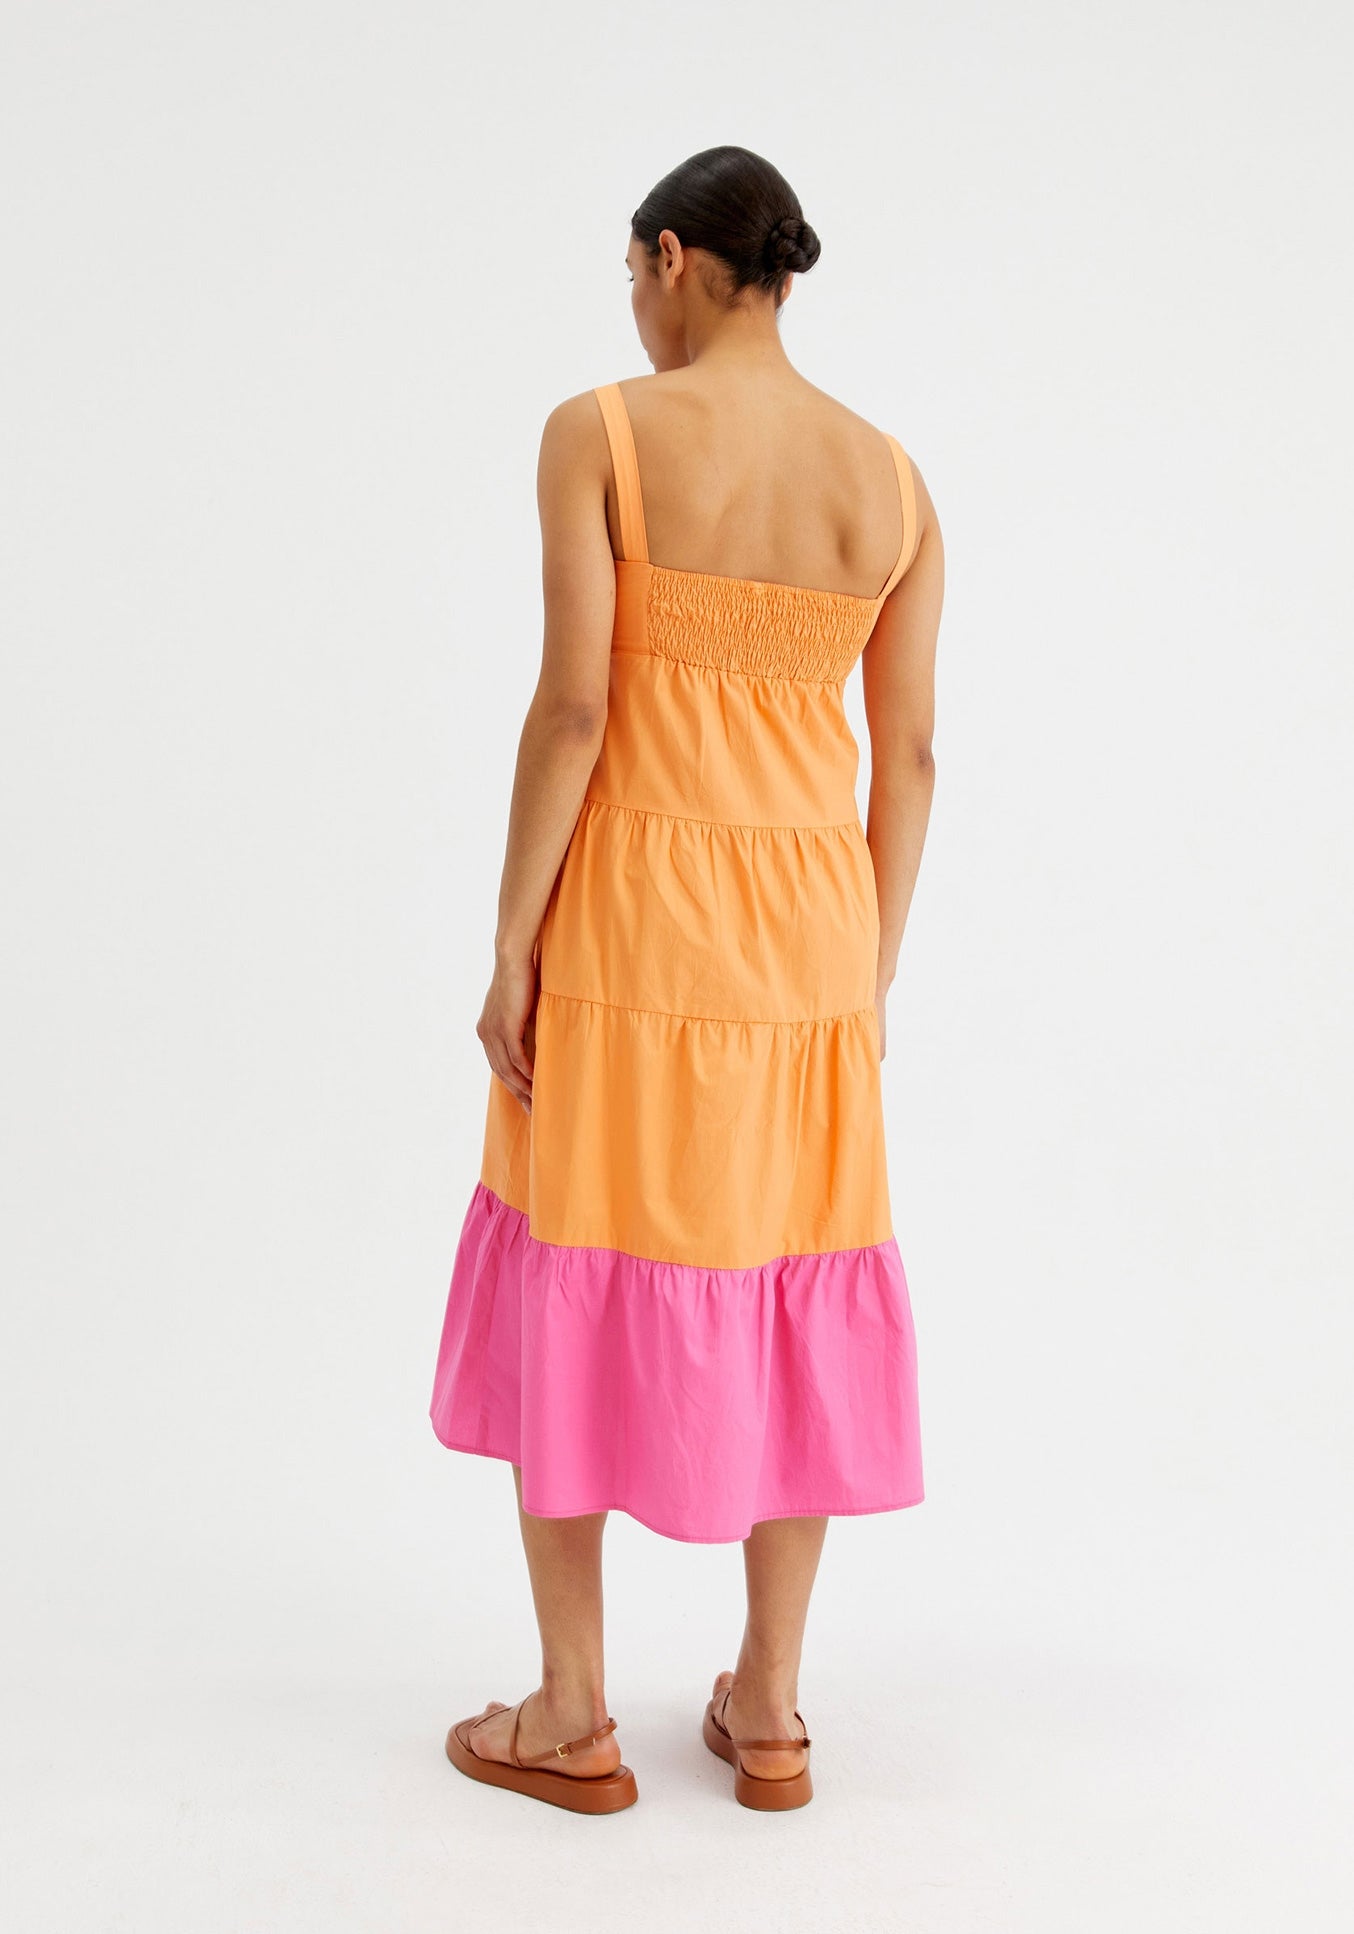 Compañia Fantastica - Pink & Orange Colour Block Summer Dress